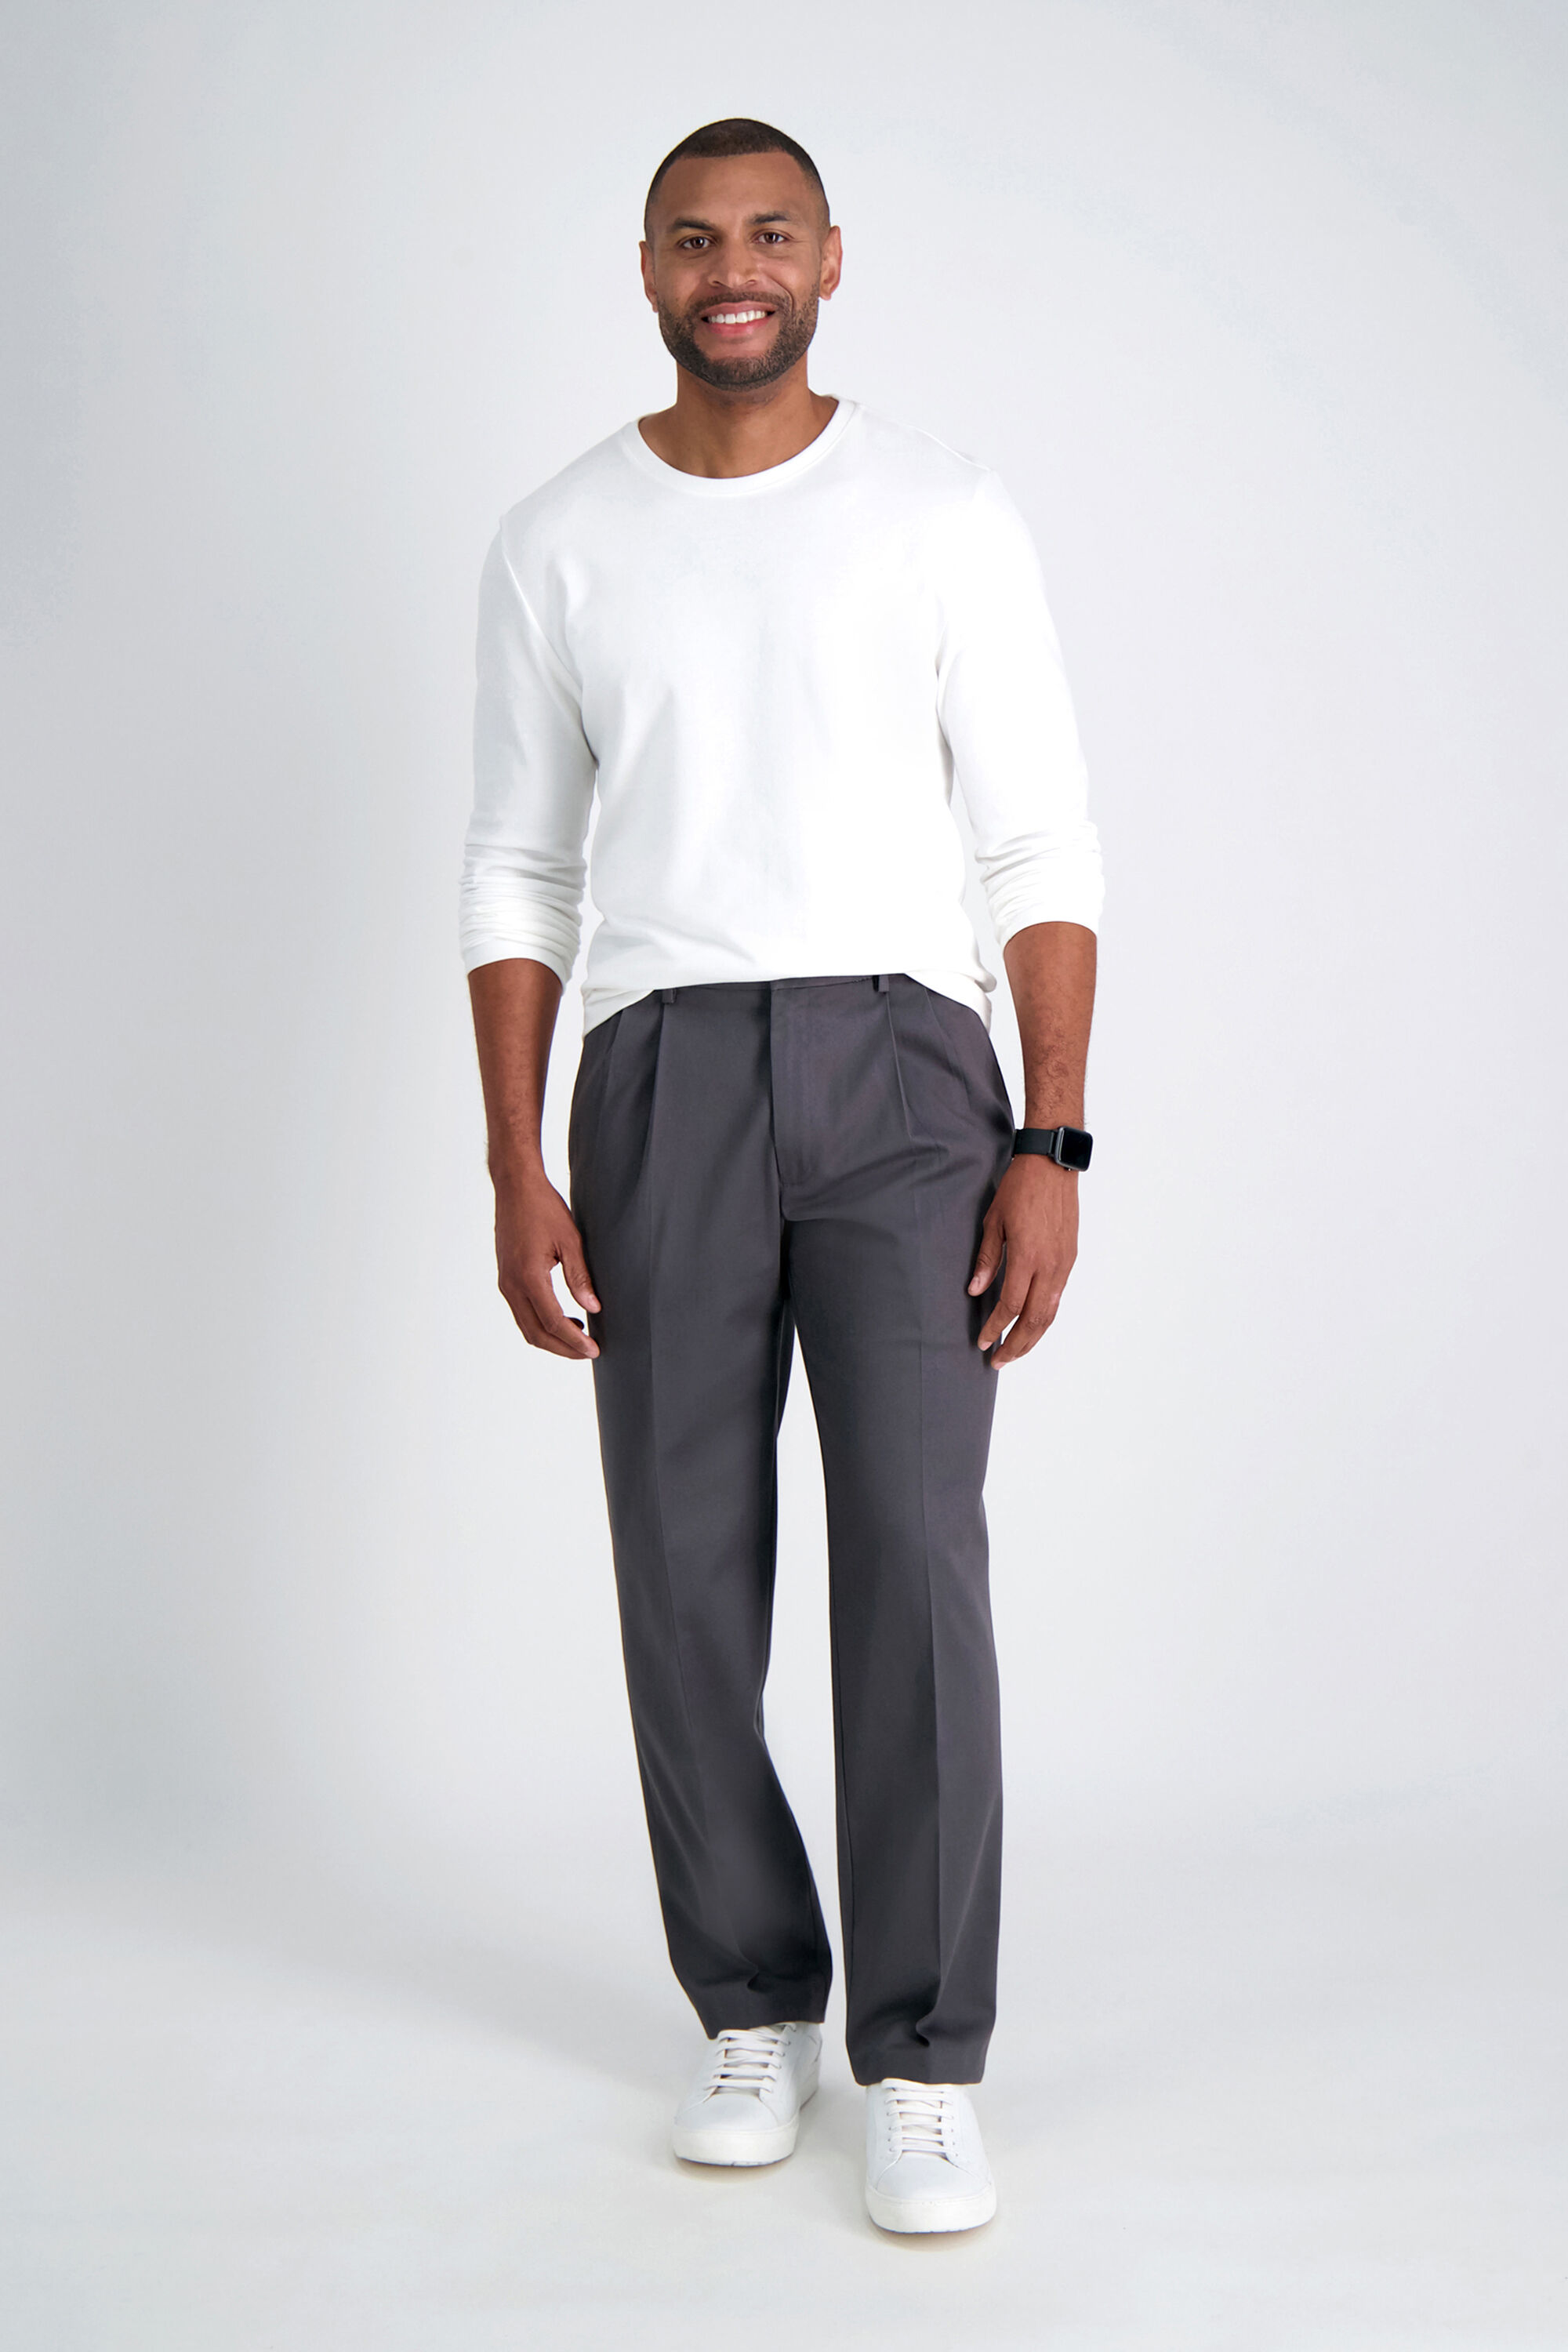 Haggar Men's Premium No Iron Classic Fit Flat Front Casual Pants - Toast  38x32 : Target